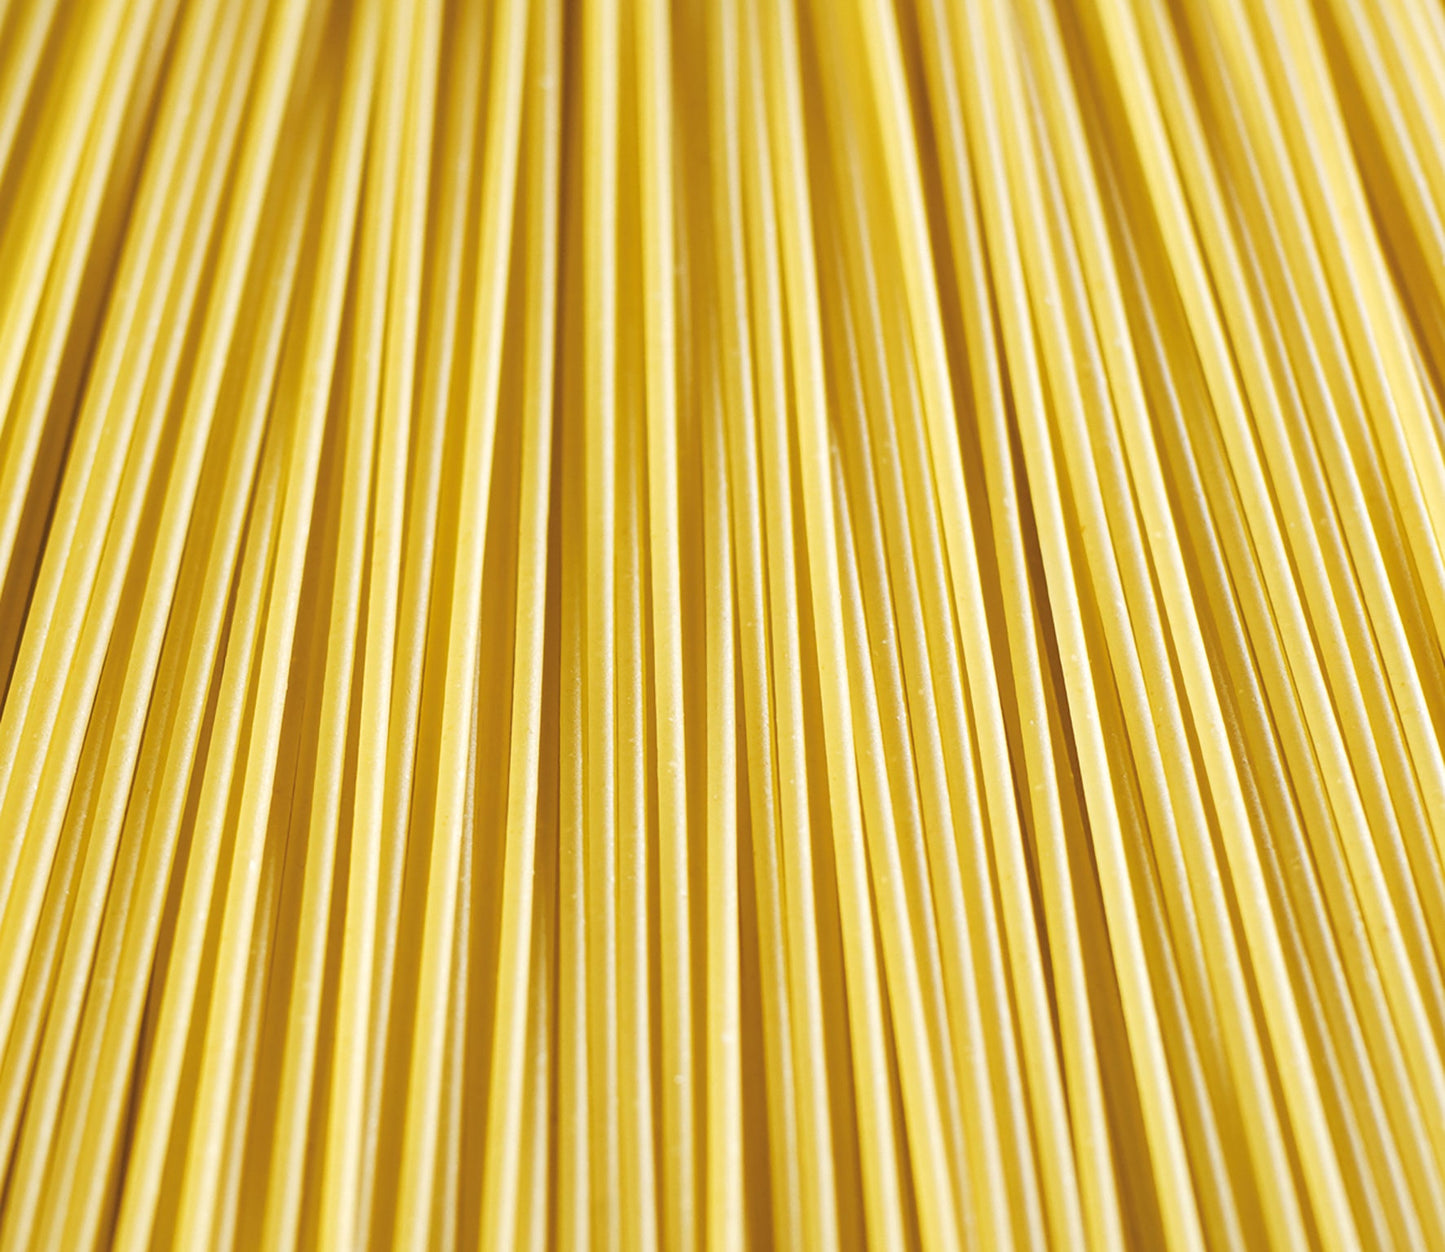 Pastas cutter for spaghetti